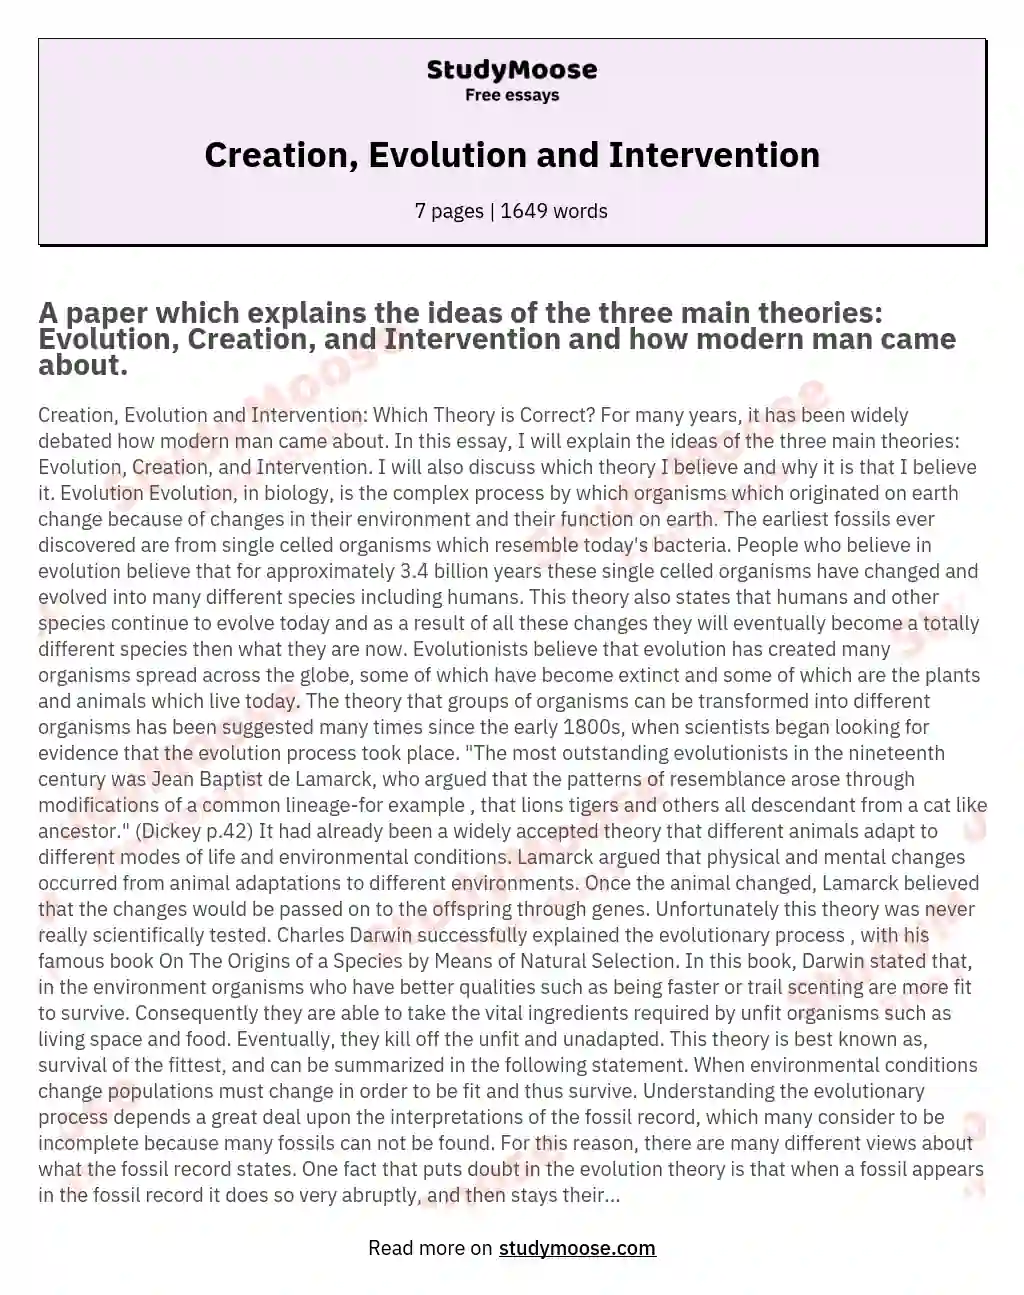 Creation, Evolution and Intervention